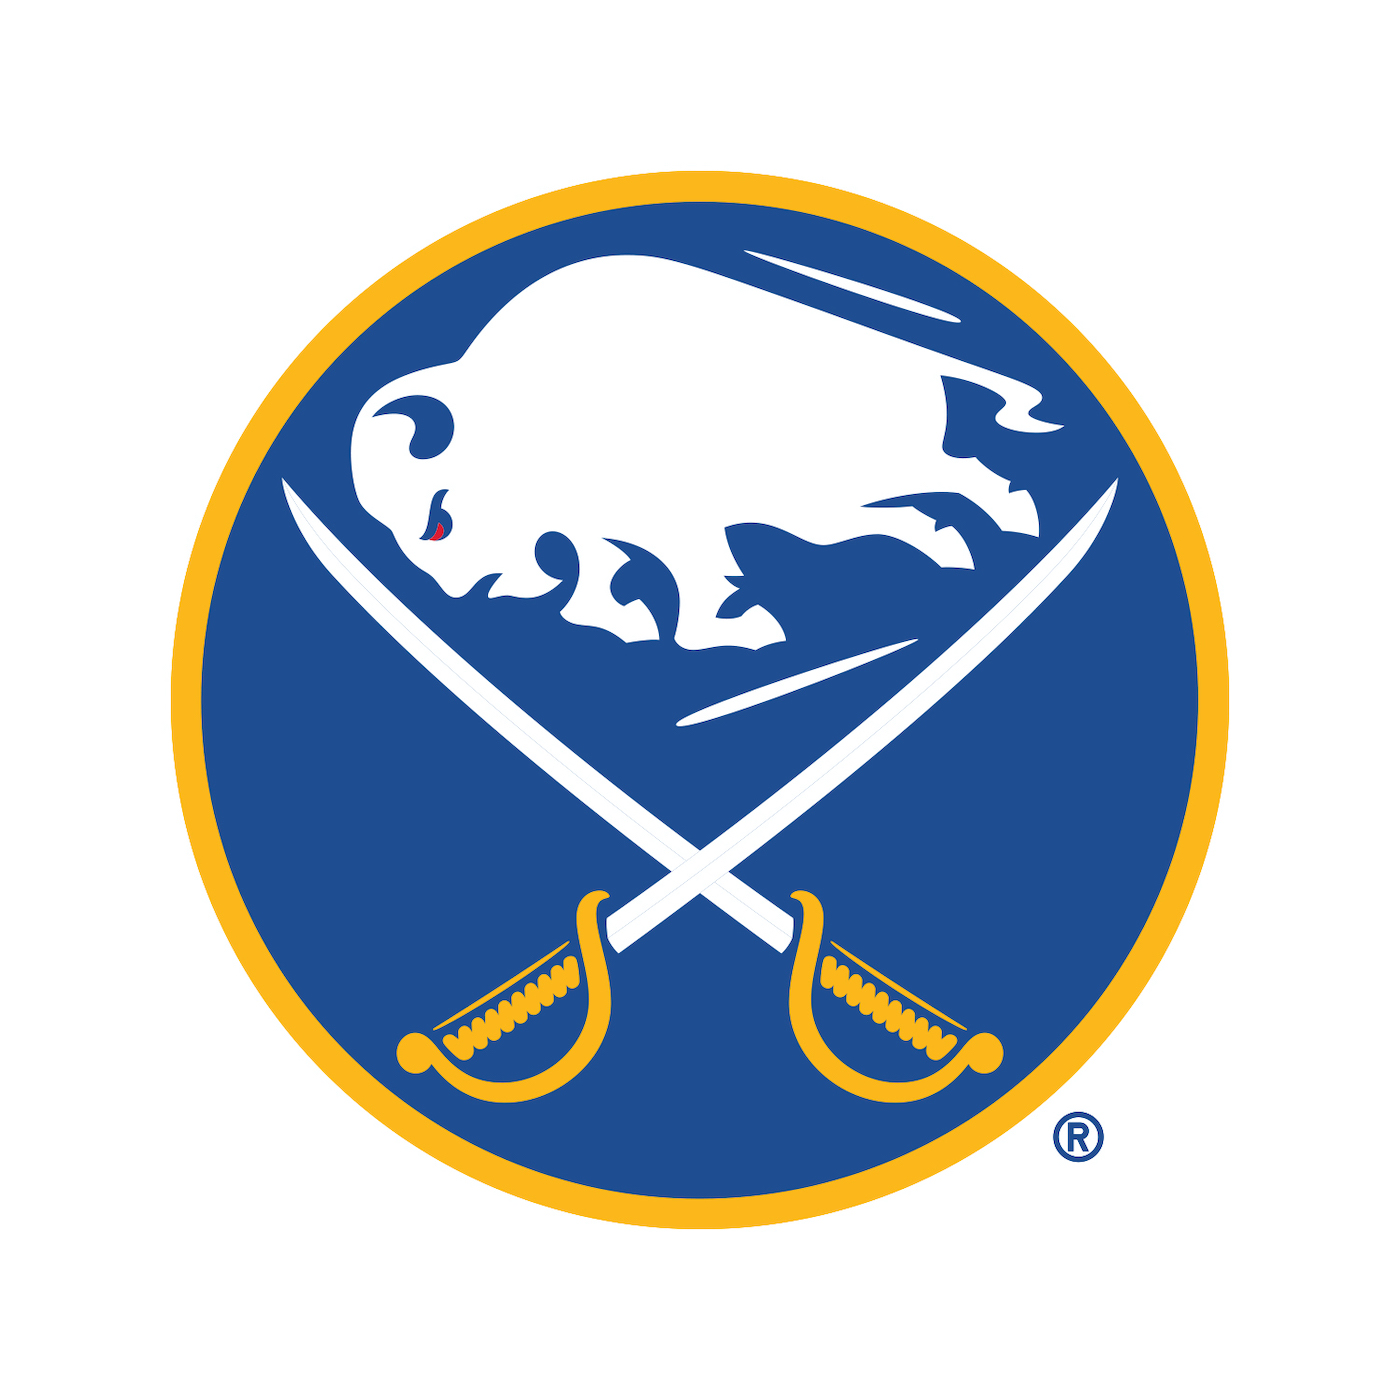 Buffalo Sabres logo courtesy of the Buffalo Sabres and Pegula Sports and Entertainment